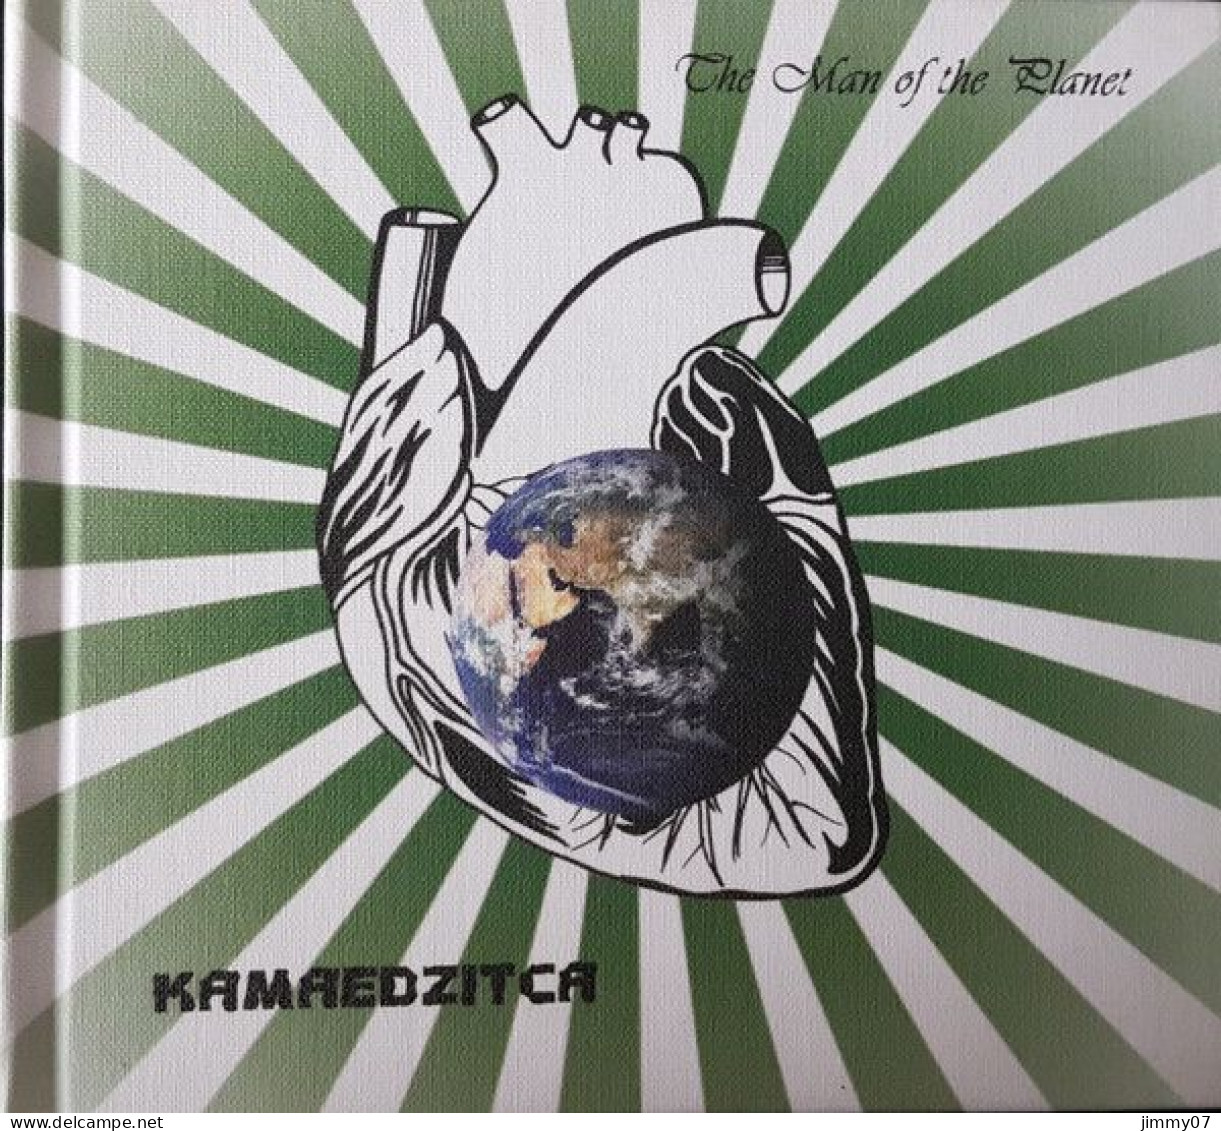 Kamaedzitca - Man Of The Planet (CD, MiniAlbum, Dig) - Rock